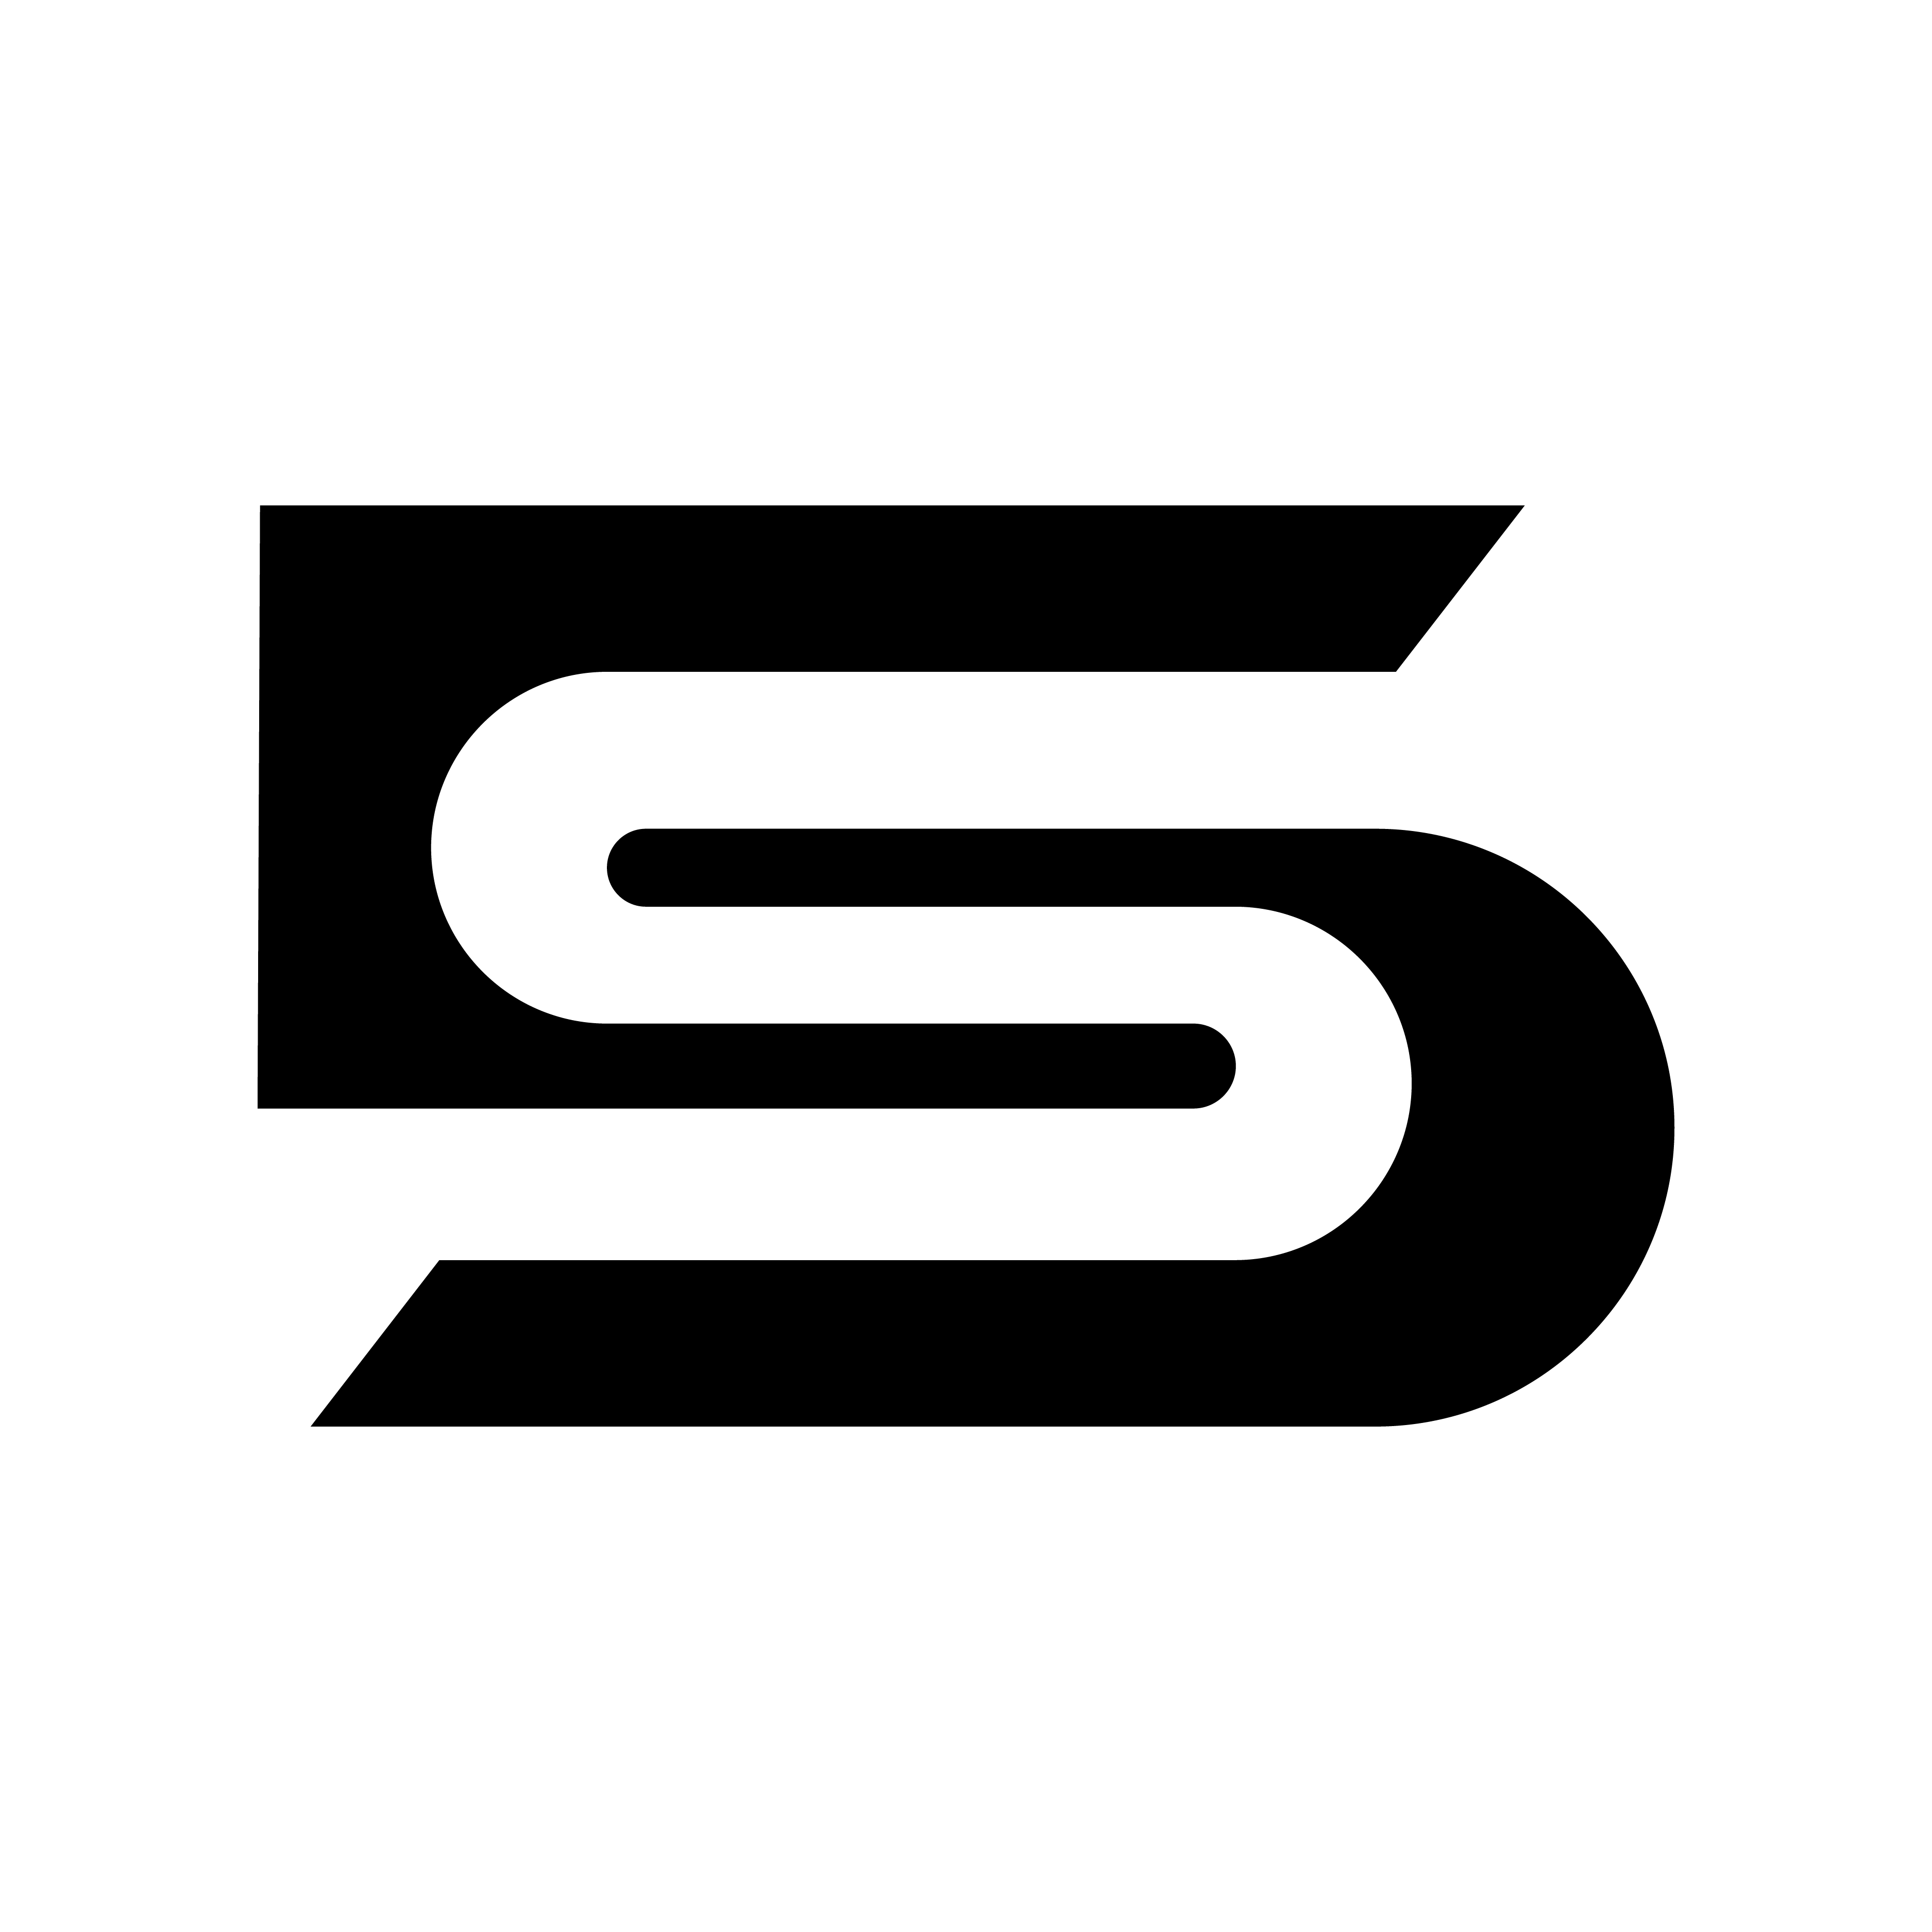 5S Logo logo design by logo designer Spasova Design for your inspiration and for the worlds largest logo competition